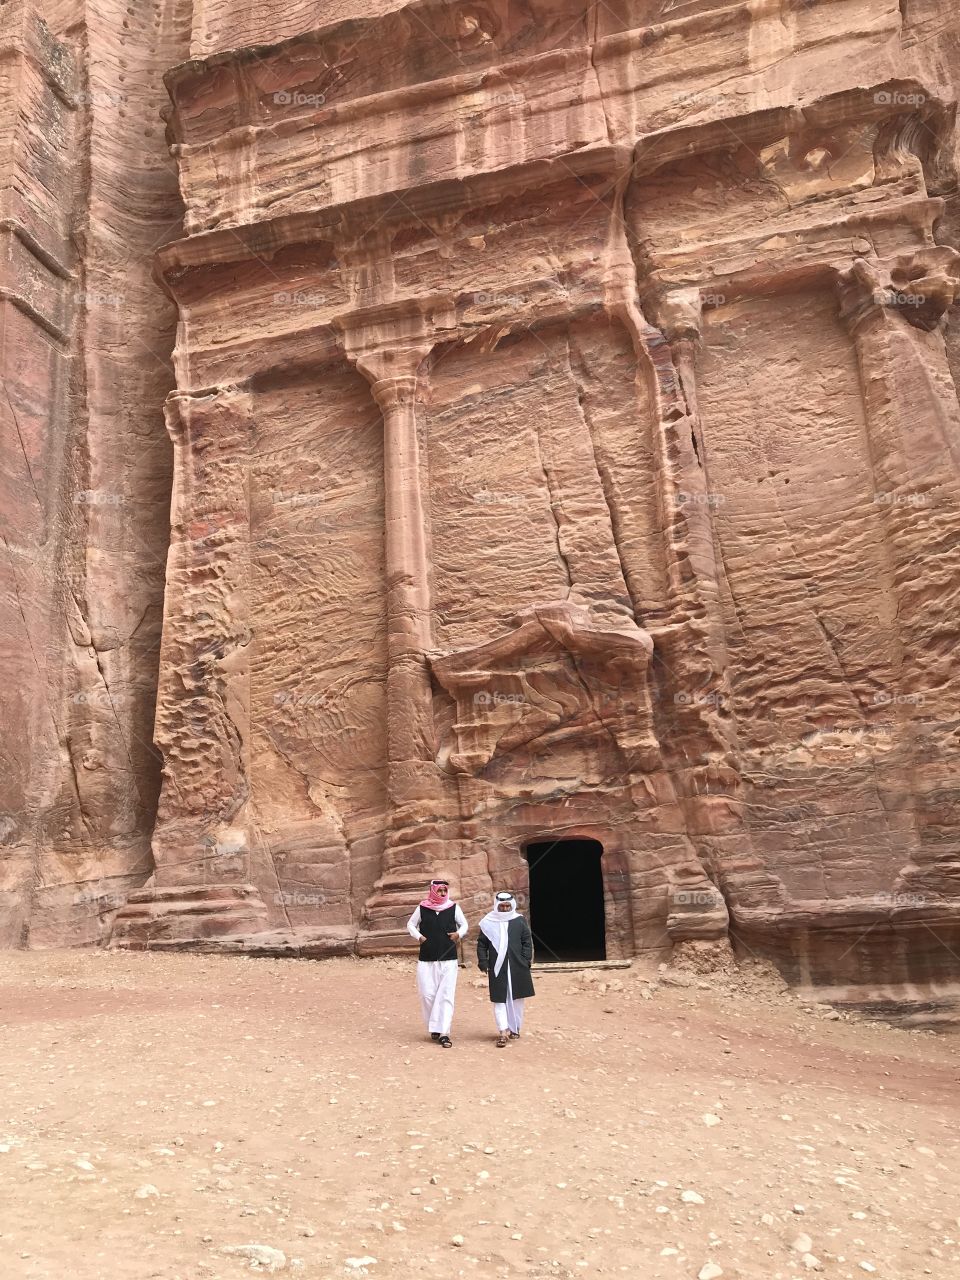 Two Jordanian men walking out of an ancient ruin in Petra, Jordan